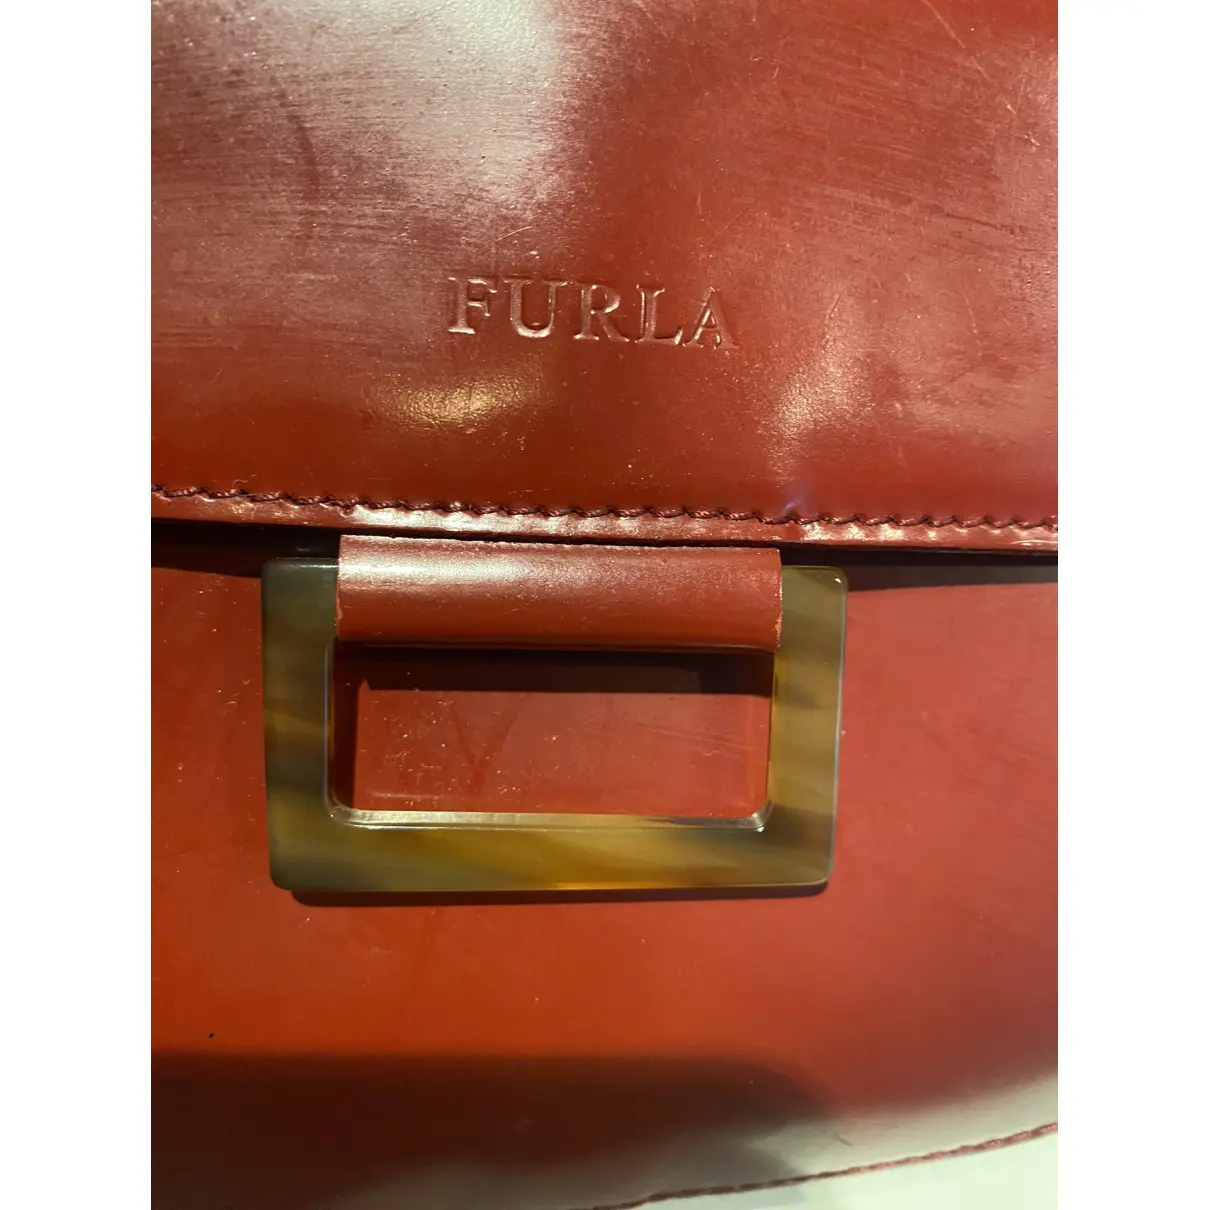 Buy Furla Metropolis leather crossbody bag online